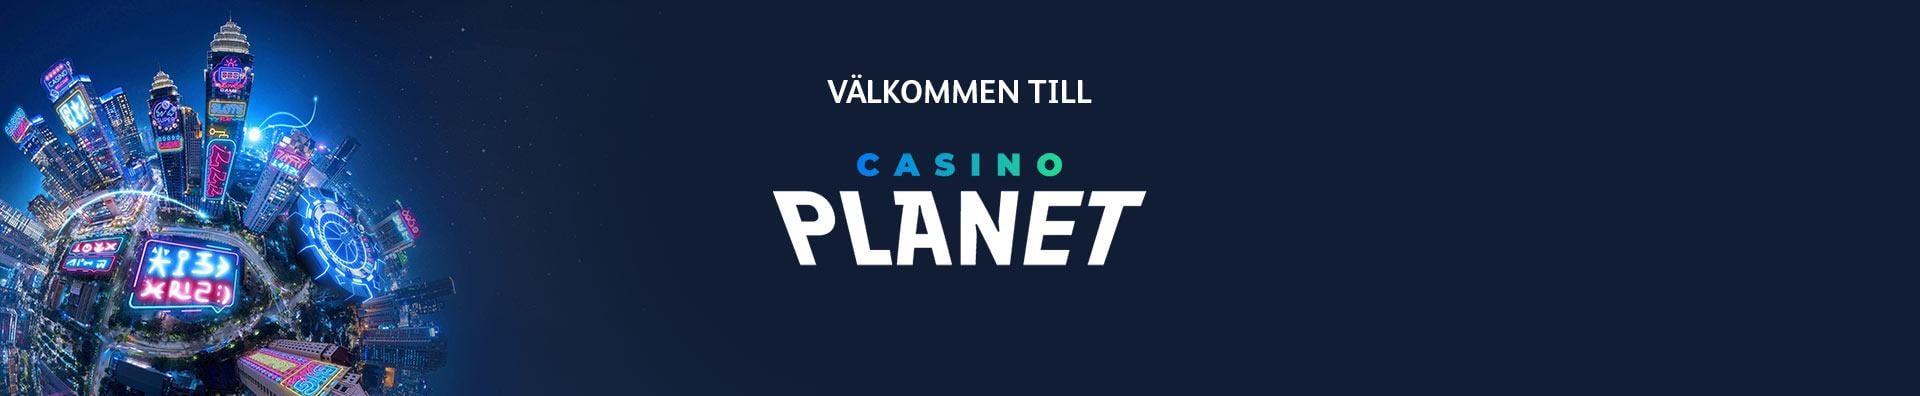 Casino Planet recension